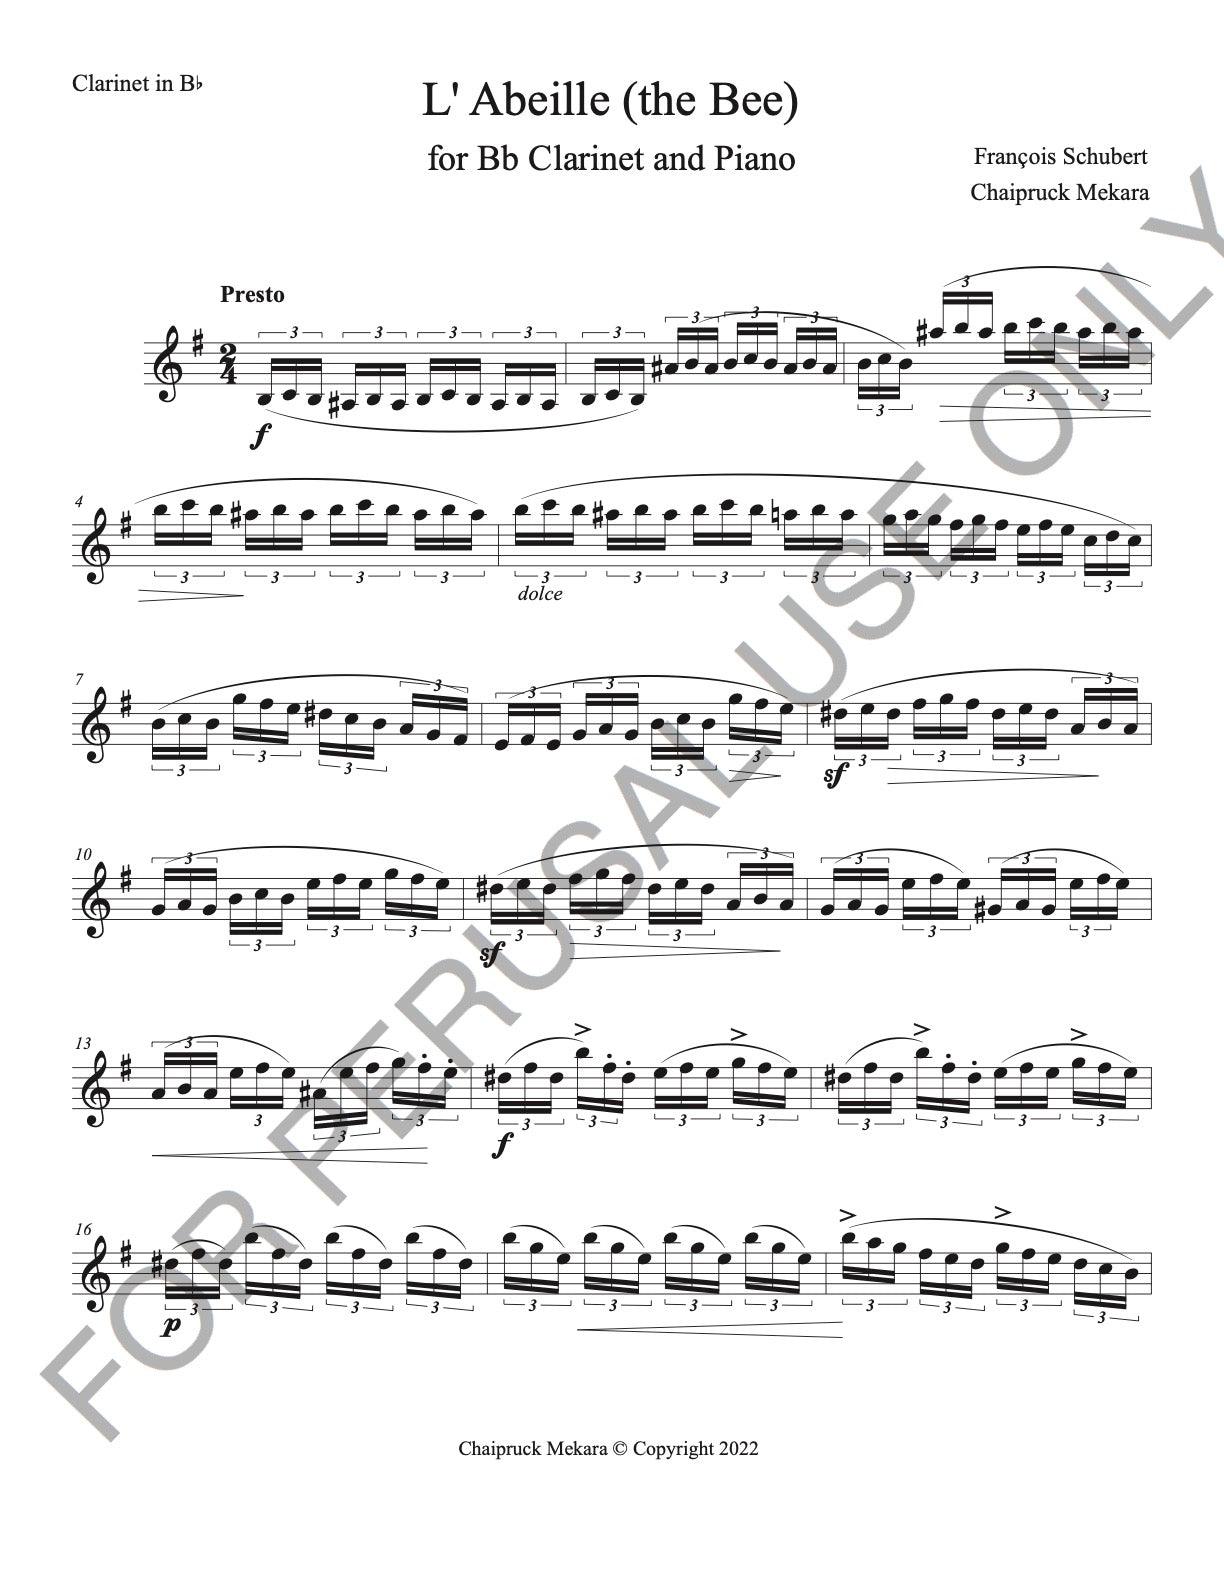 Bb Clarinet and Piano sheet music:Schubert's L'Abeille (The Bee) - ChaipruckMekara